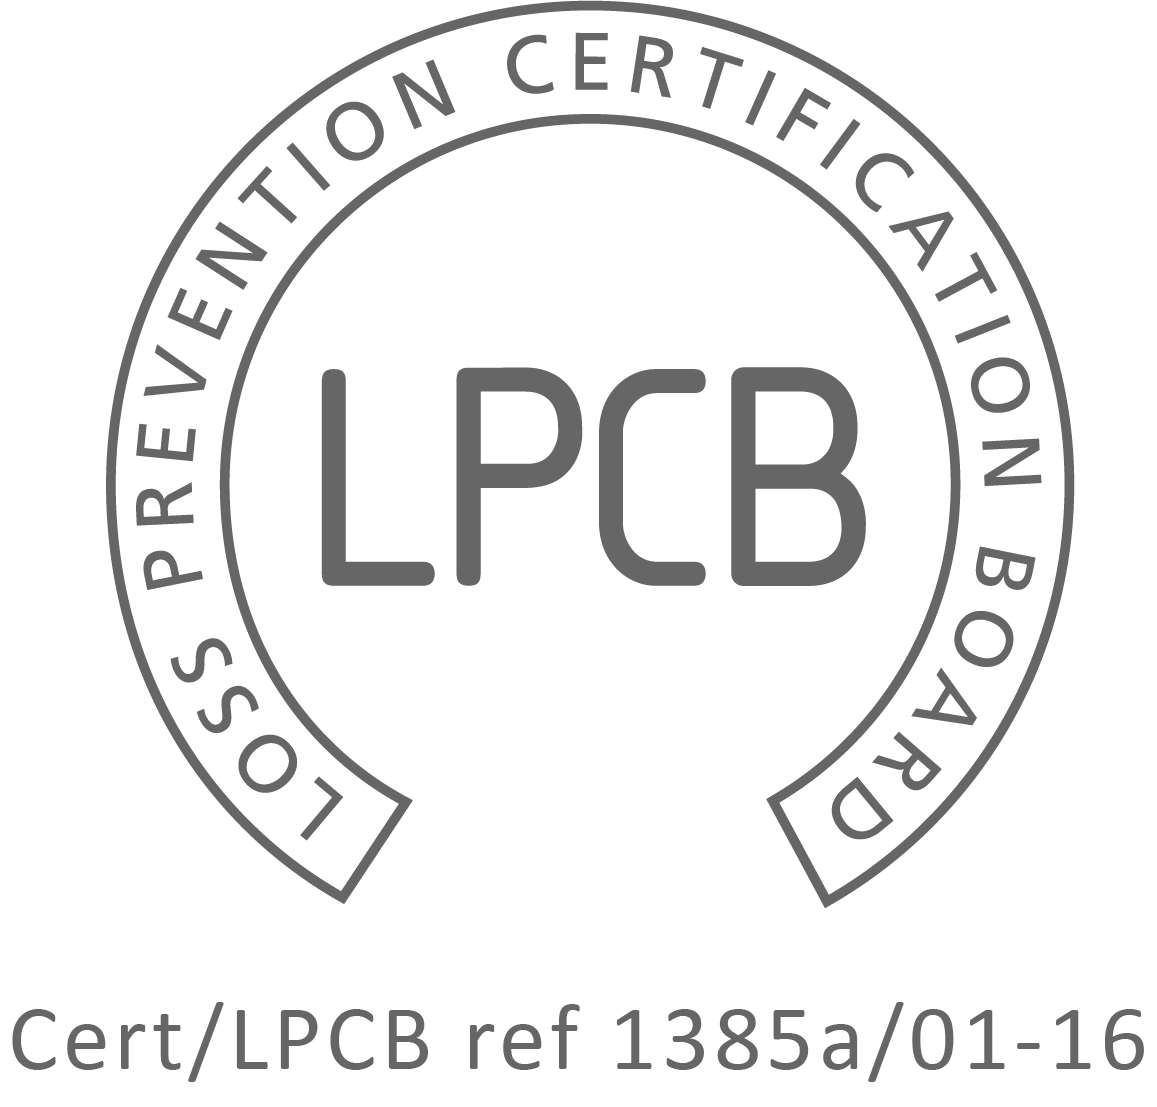 lpcb-logo-mid-grey-1385a-01-16.jpg